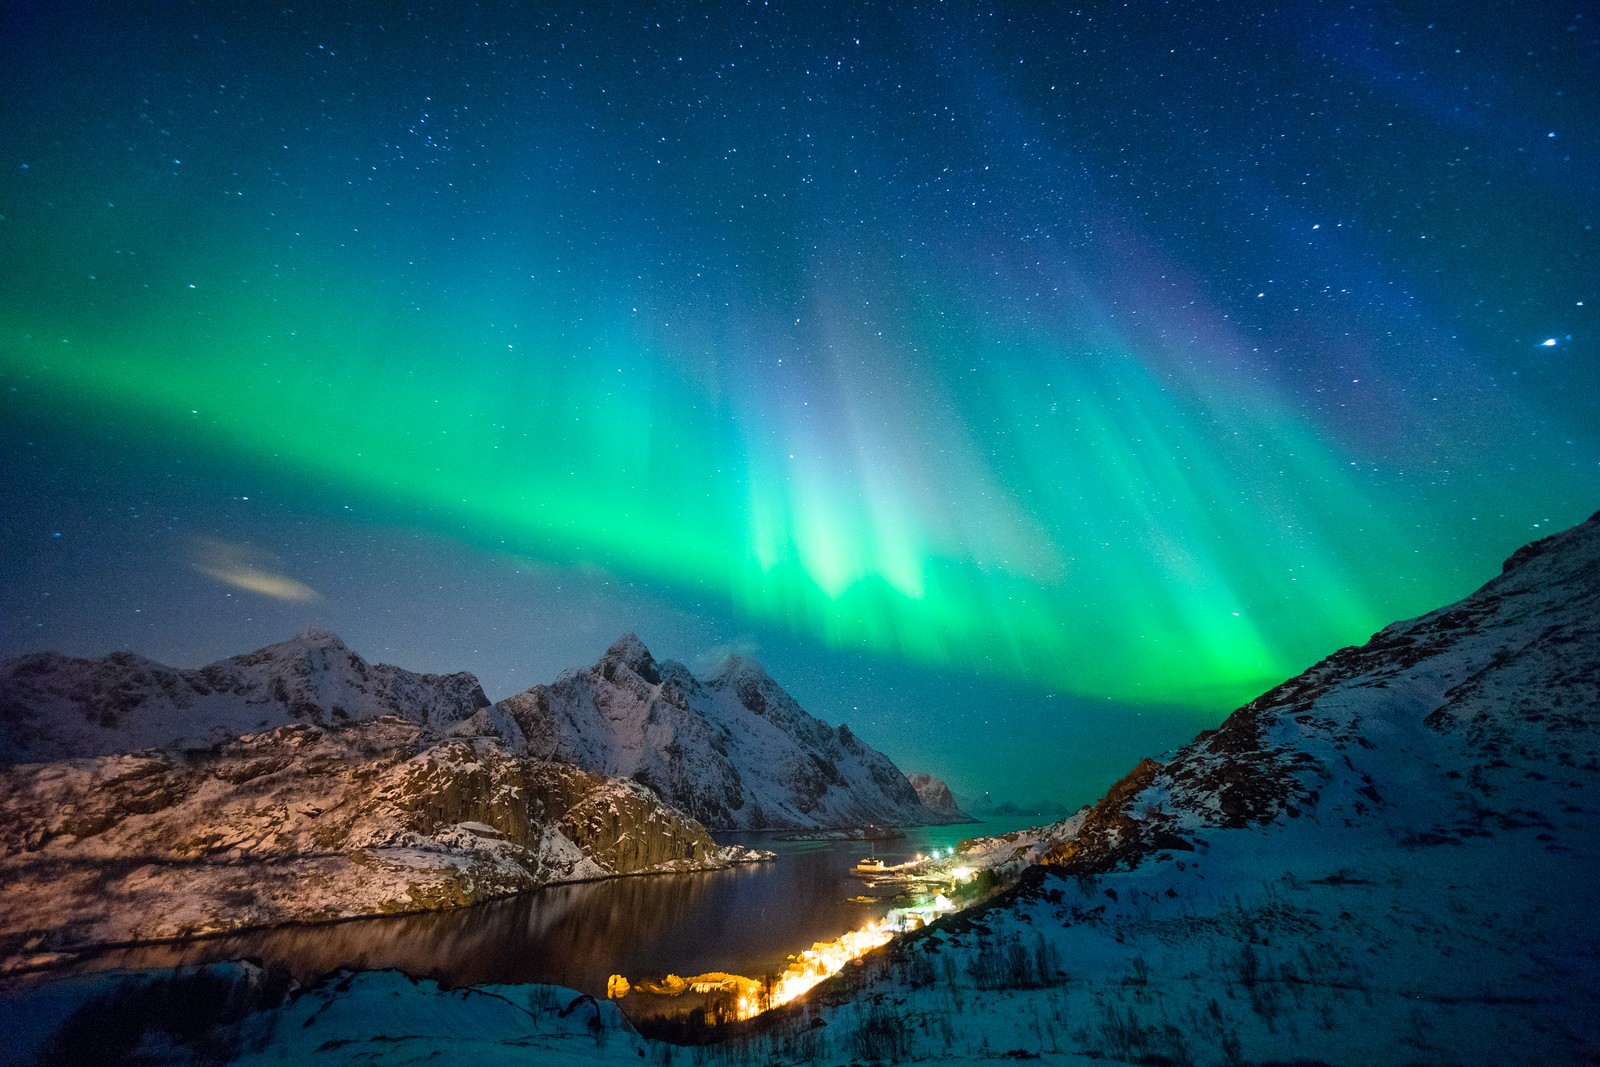 General 1600x1067 nature mountains snow stars aurorae green blue night landscape lights